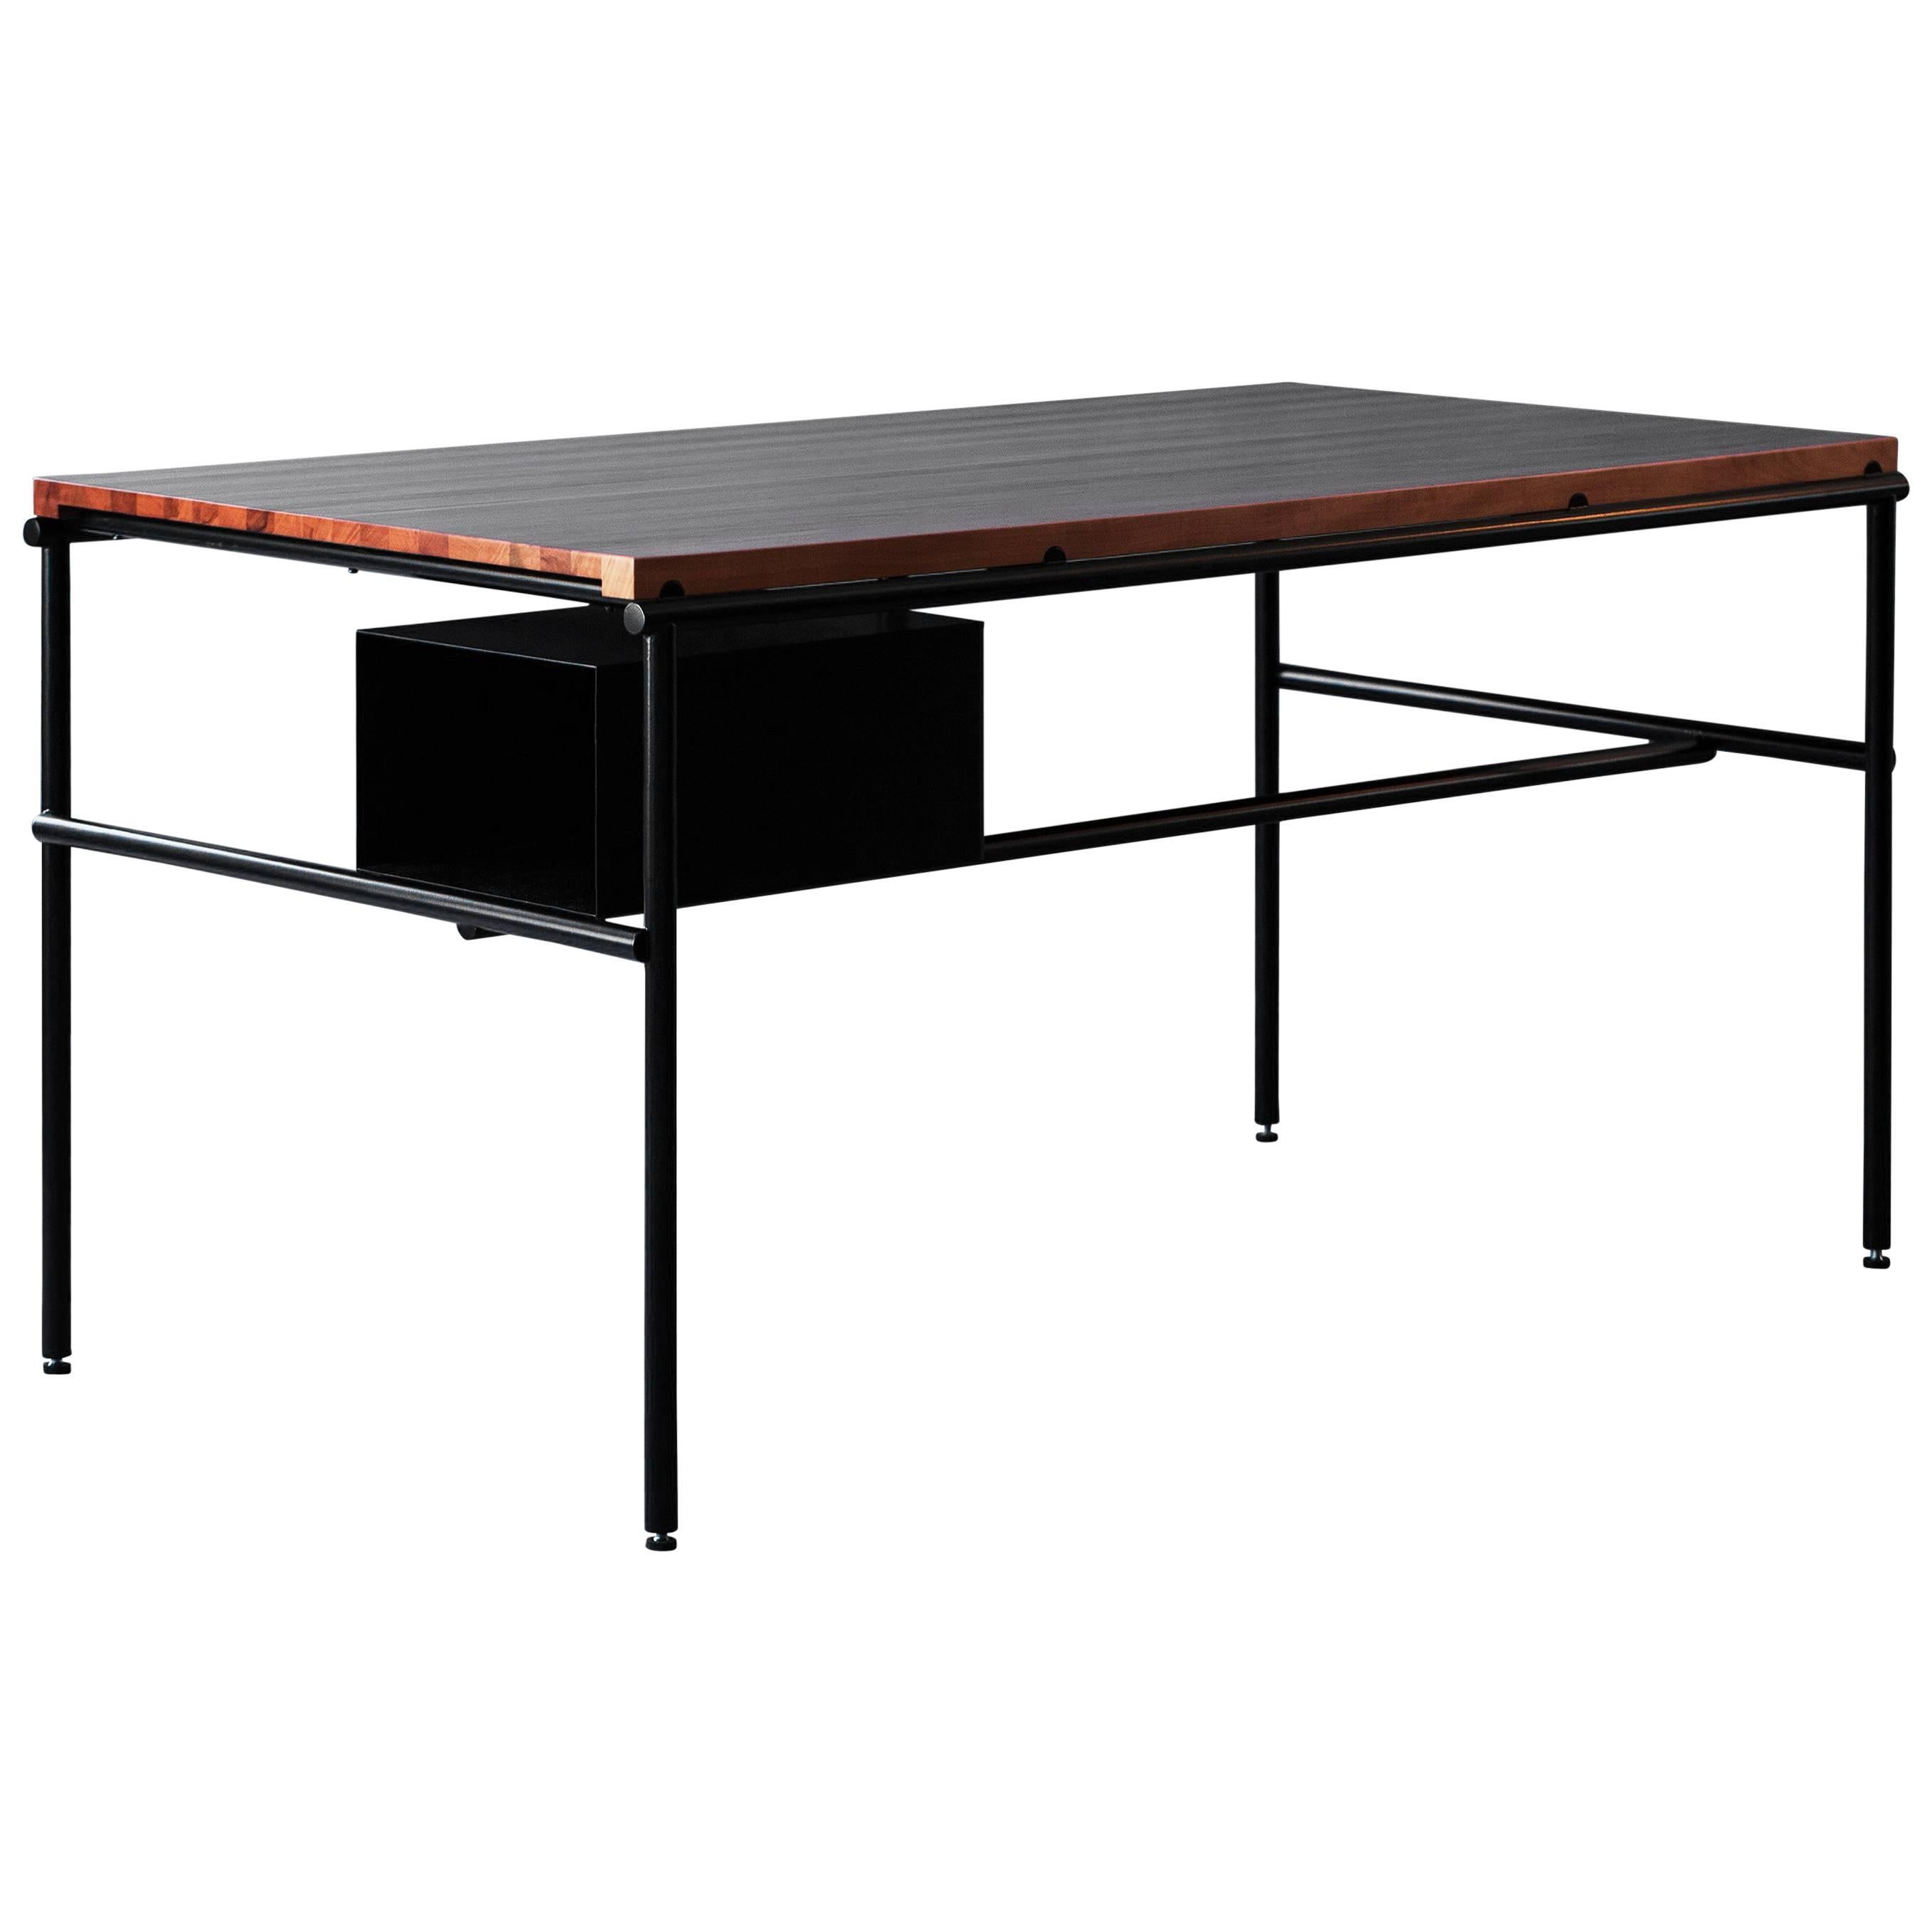 JO Desk by DUVALD Contemporary Desk Handcrafted in Denmark. Hardwood, steel For Sale